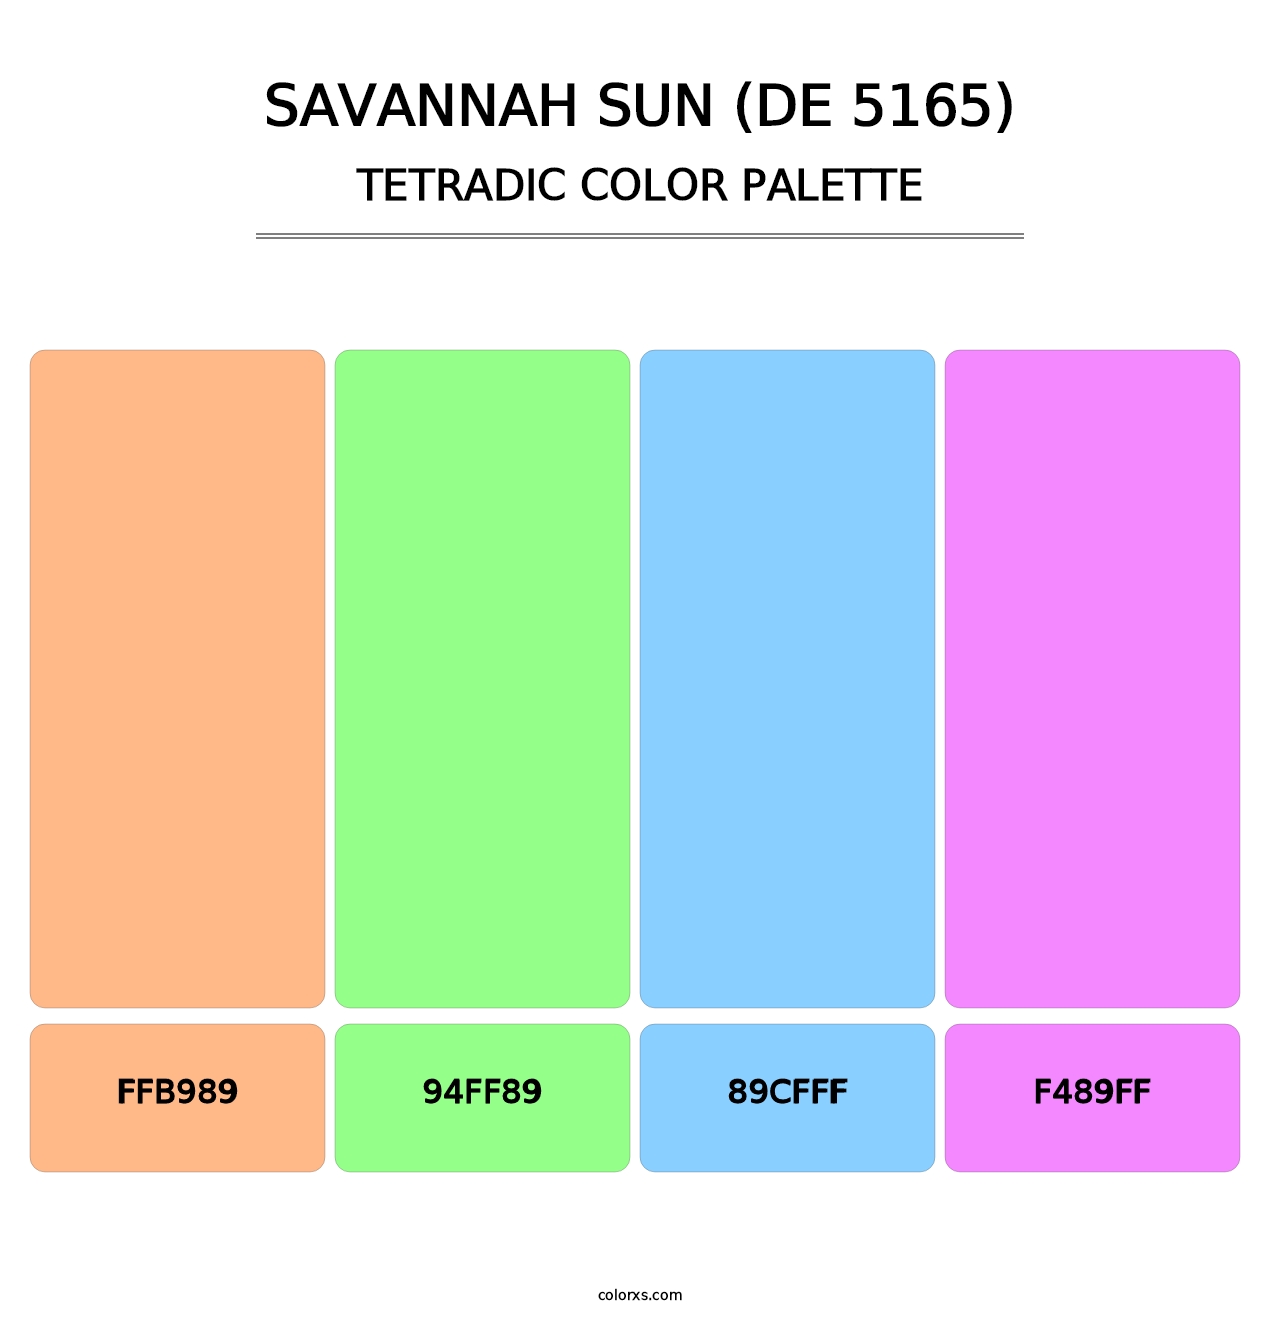 Savannah Sun (DE 5165) - Tetradic Color Palette